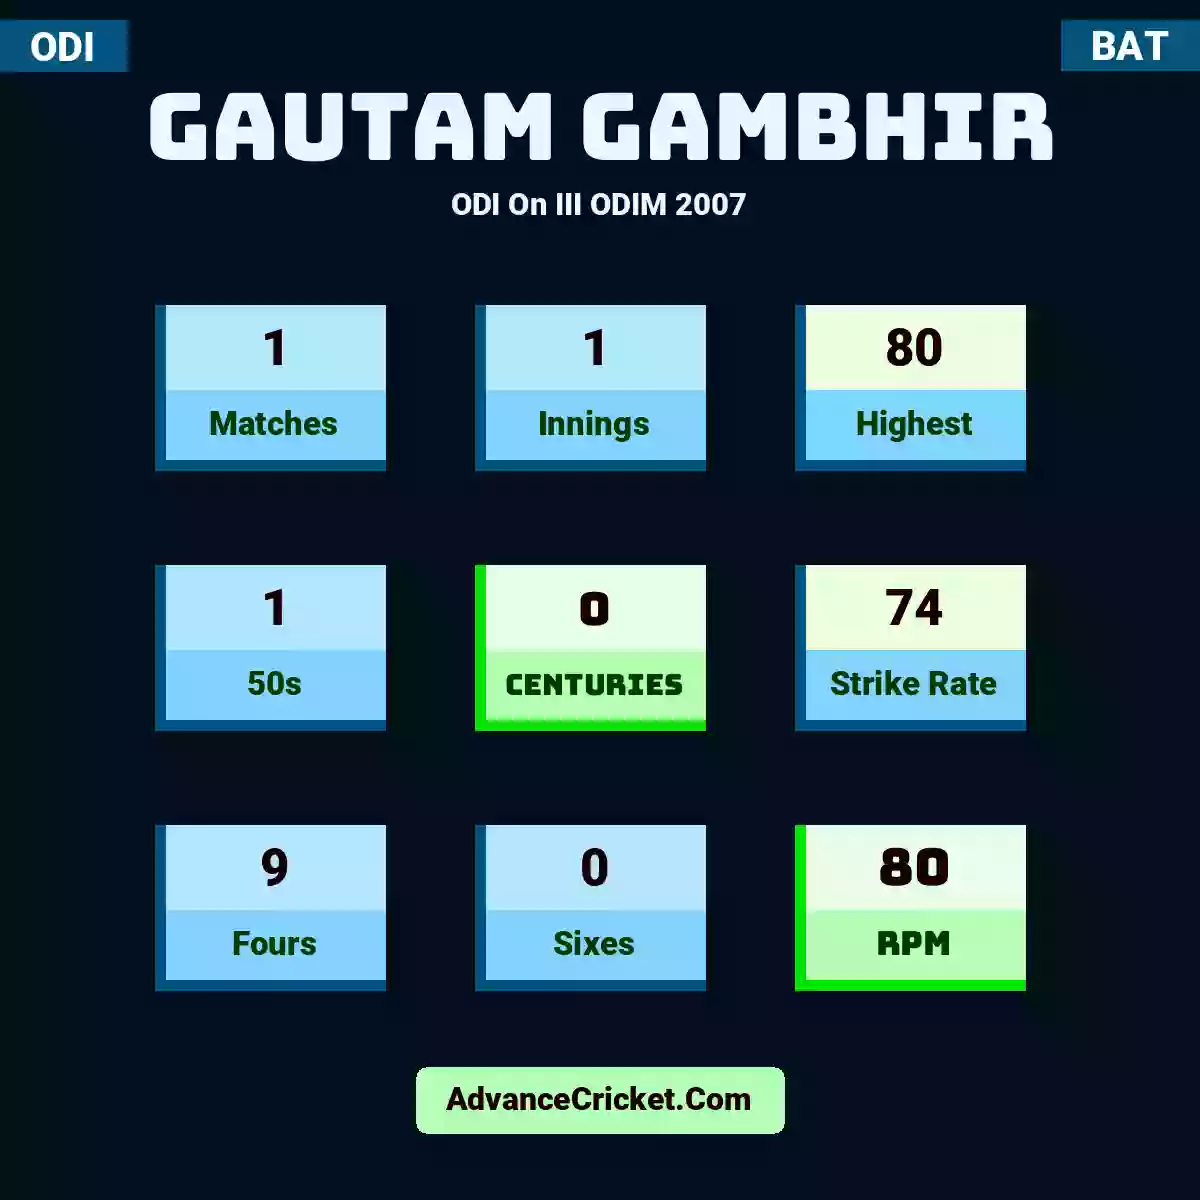 Gautam Gambhir ODI  On III ODIM 2007, Gautam Gambhir played 1 matches, scored 80 runs as highest, 1 half-centuries, and 0 centuries, with a strike rate of 74. G.Gambhir hit 9 fours and 0 sixes, with an RPM of 80.